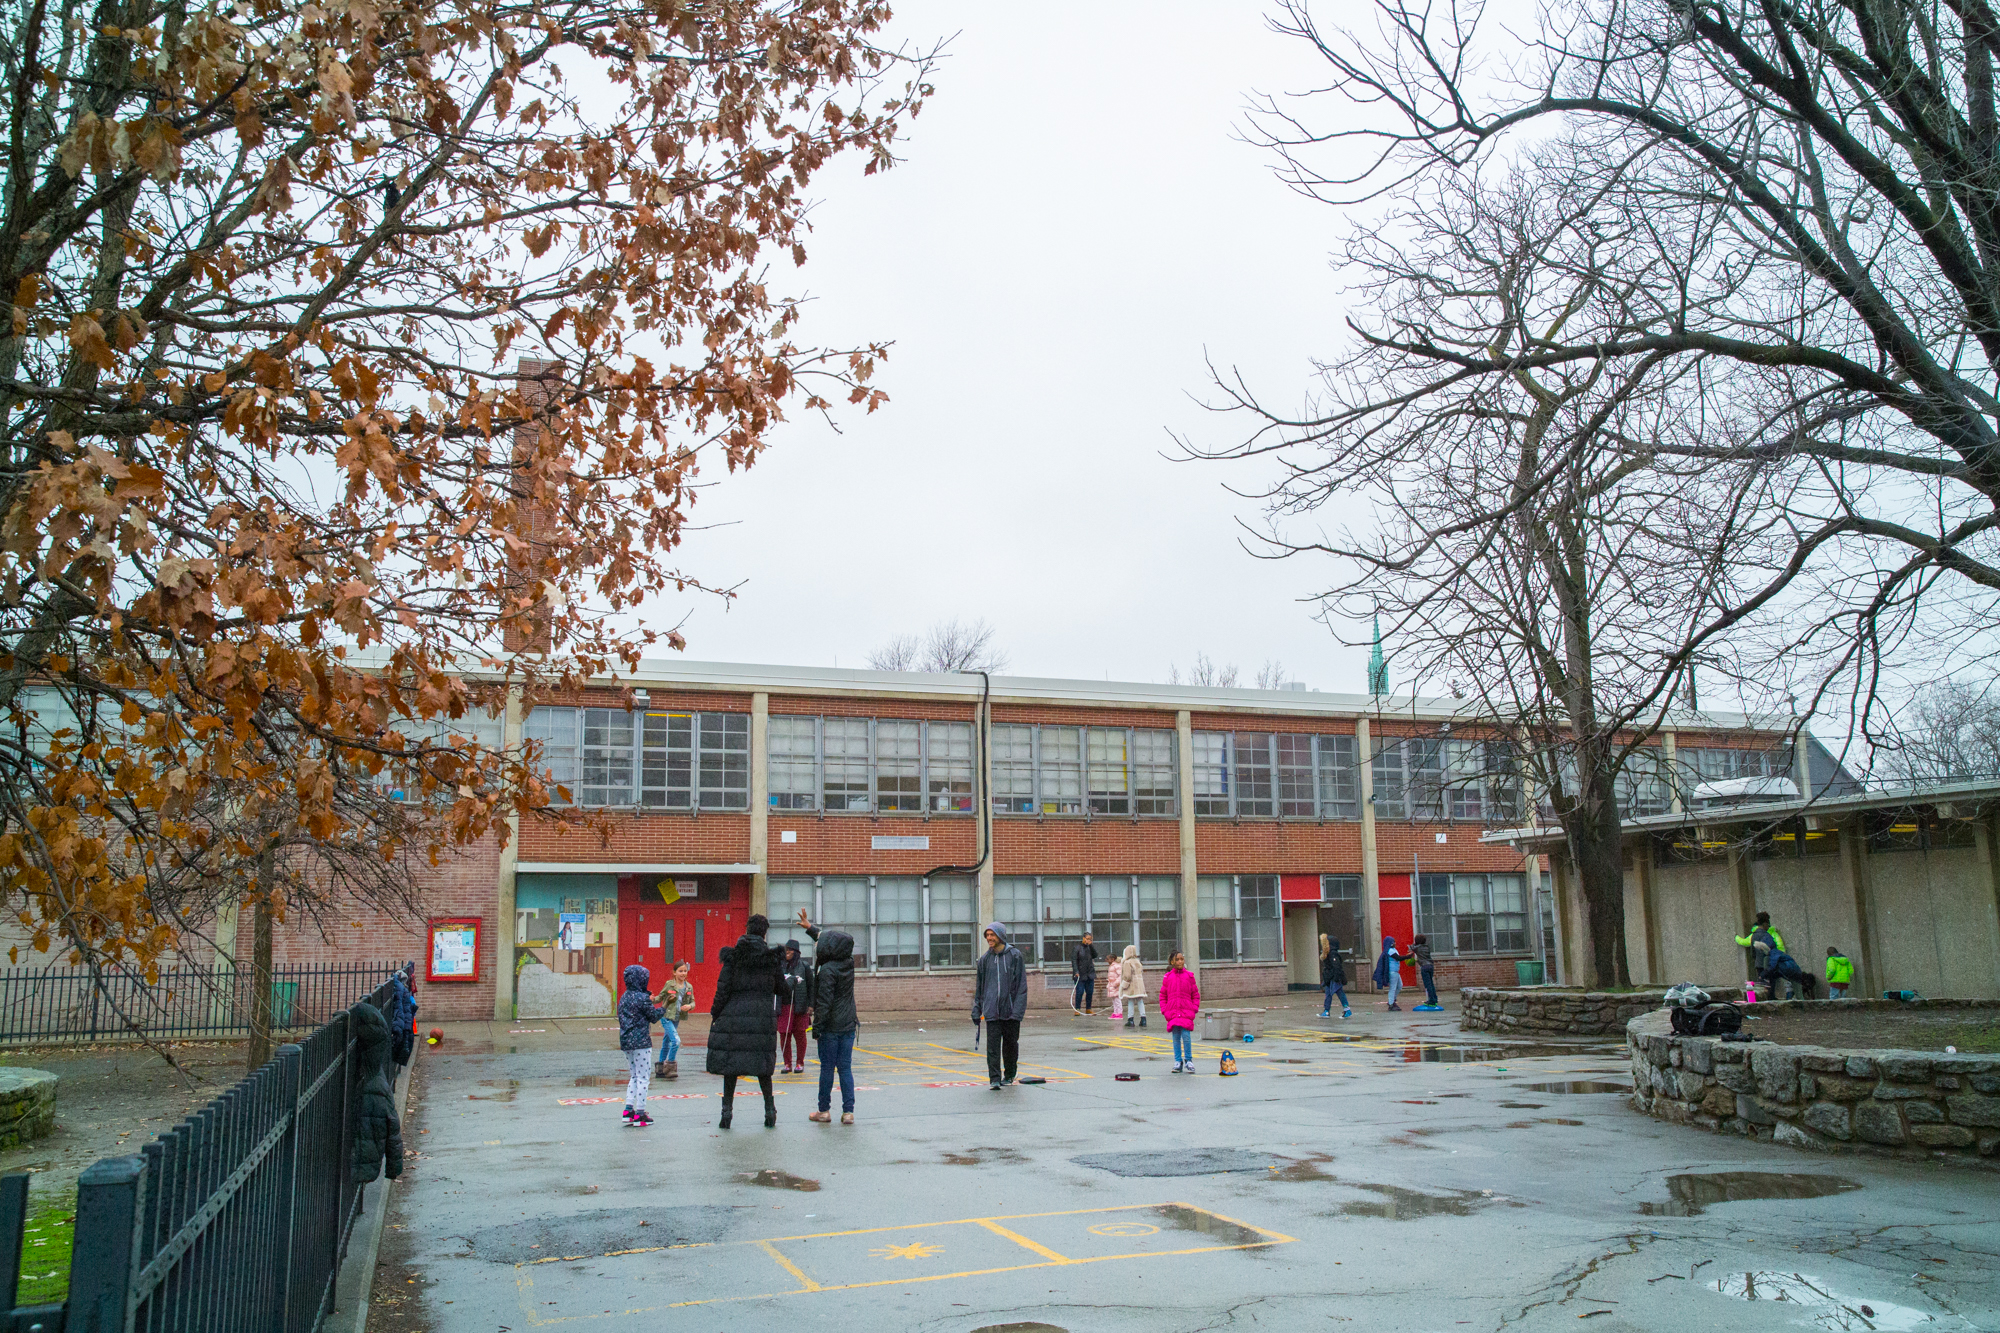 Samuel Powel Elementary School